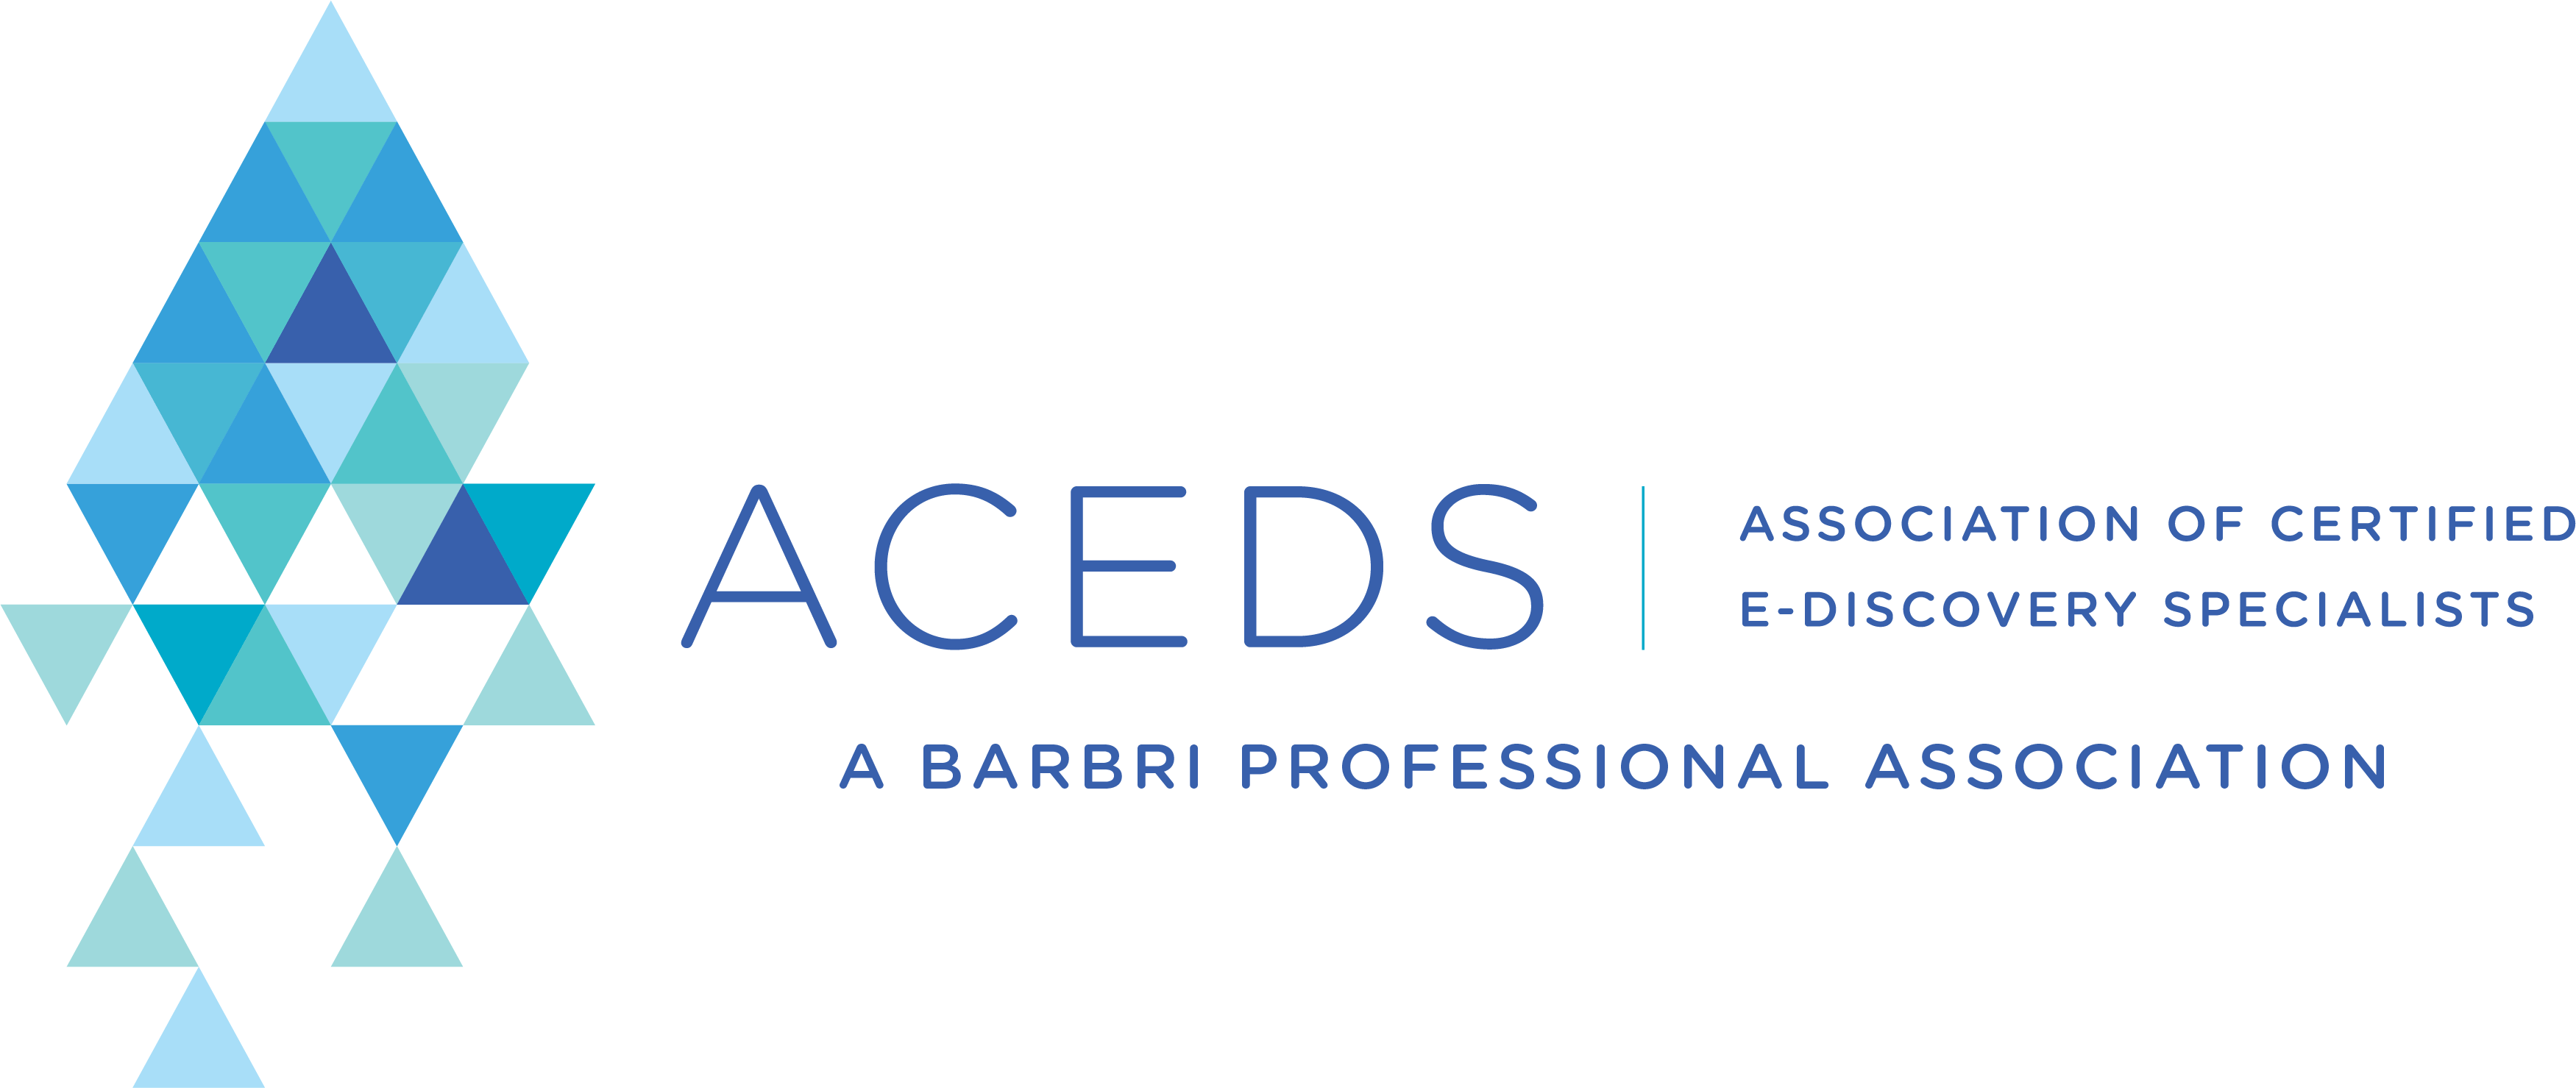 ACEDS_Logo_BARBRI Prof Asso.png